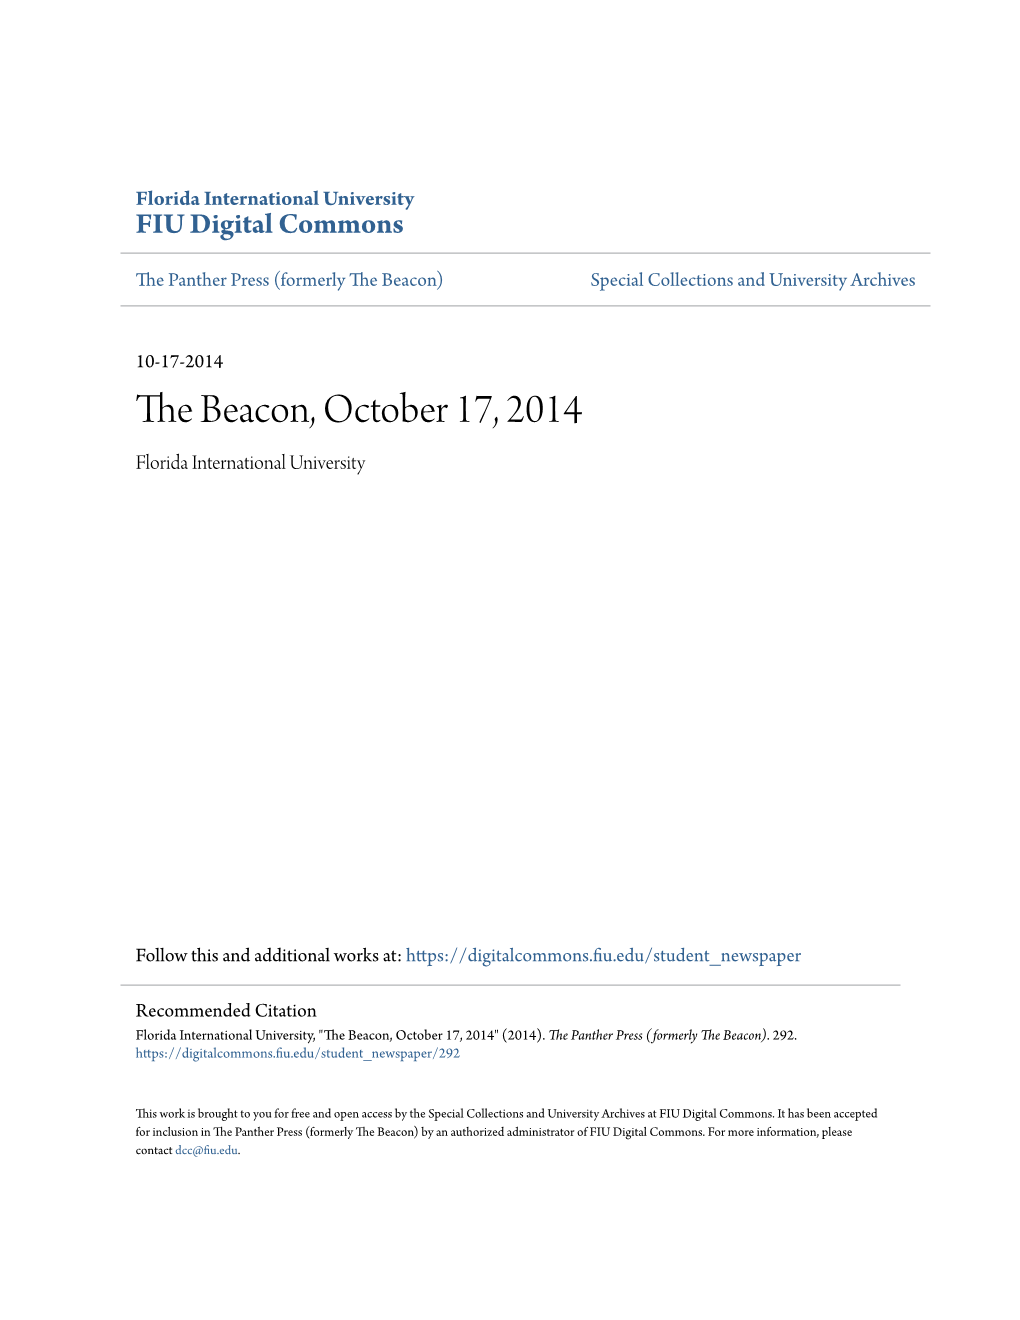 The Beacon, October 17, 2014 Florida International University